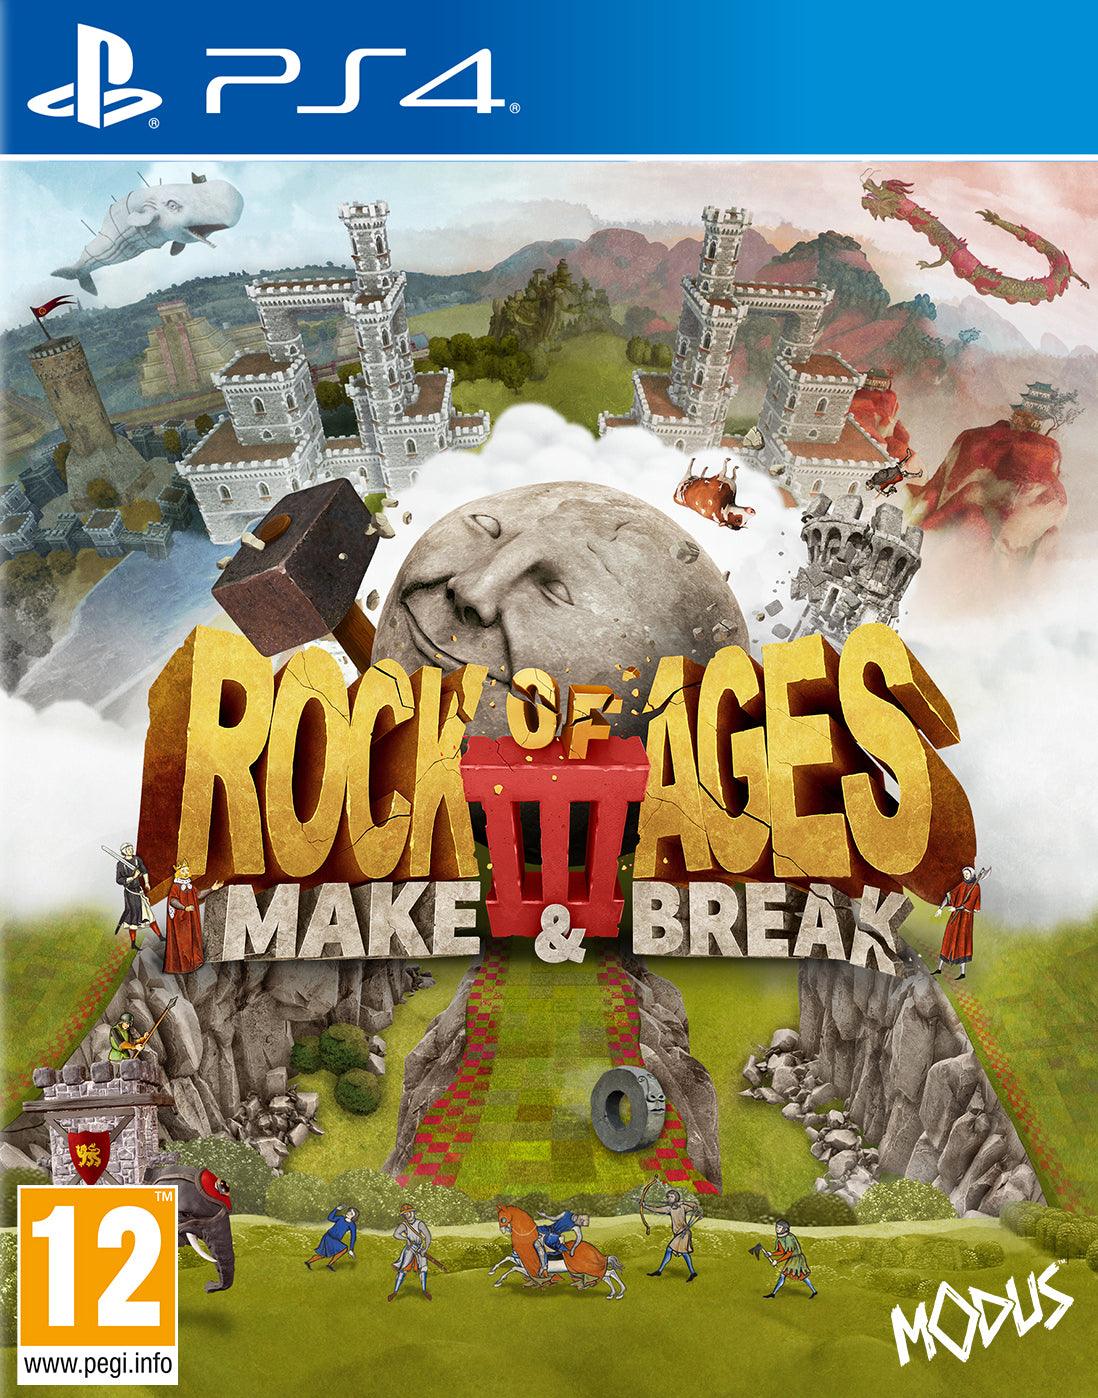 Rock Of Ages 3 Make & Break - Want a New Gadget